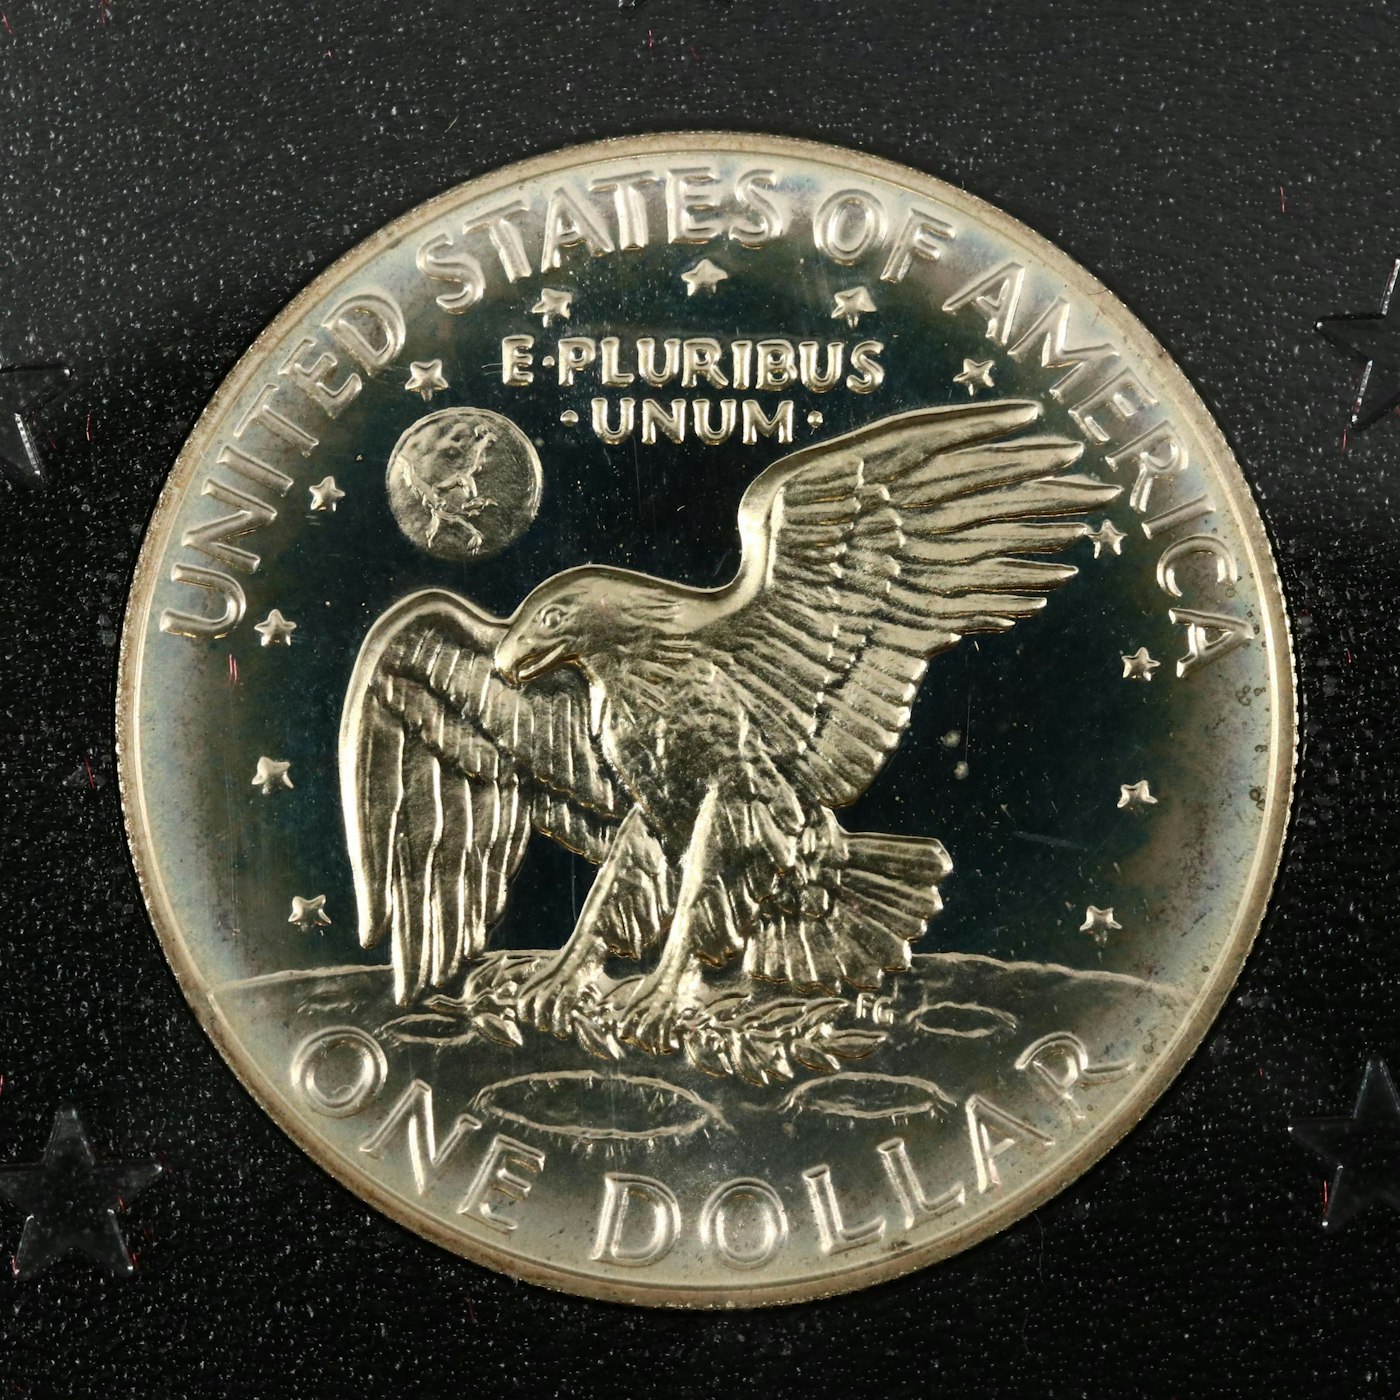 Bicentennial silver dollars worth